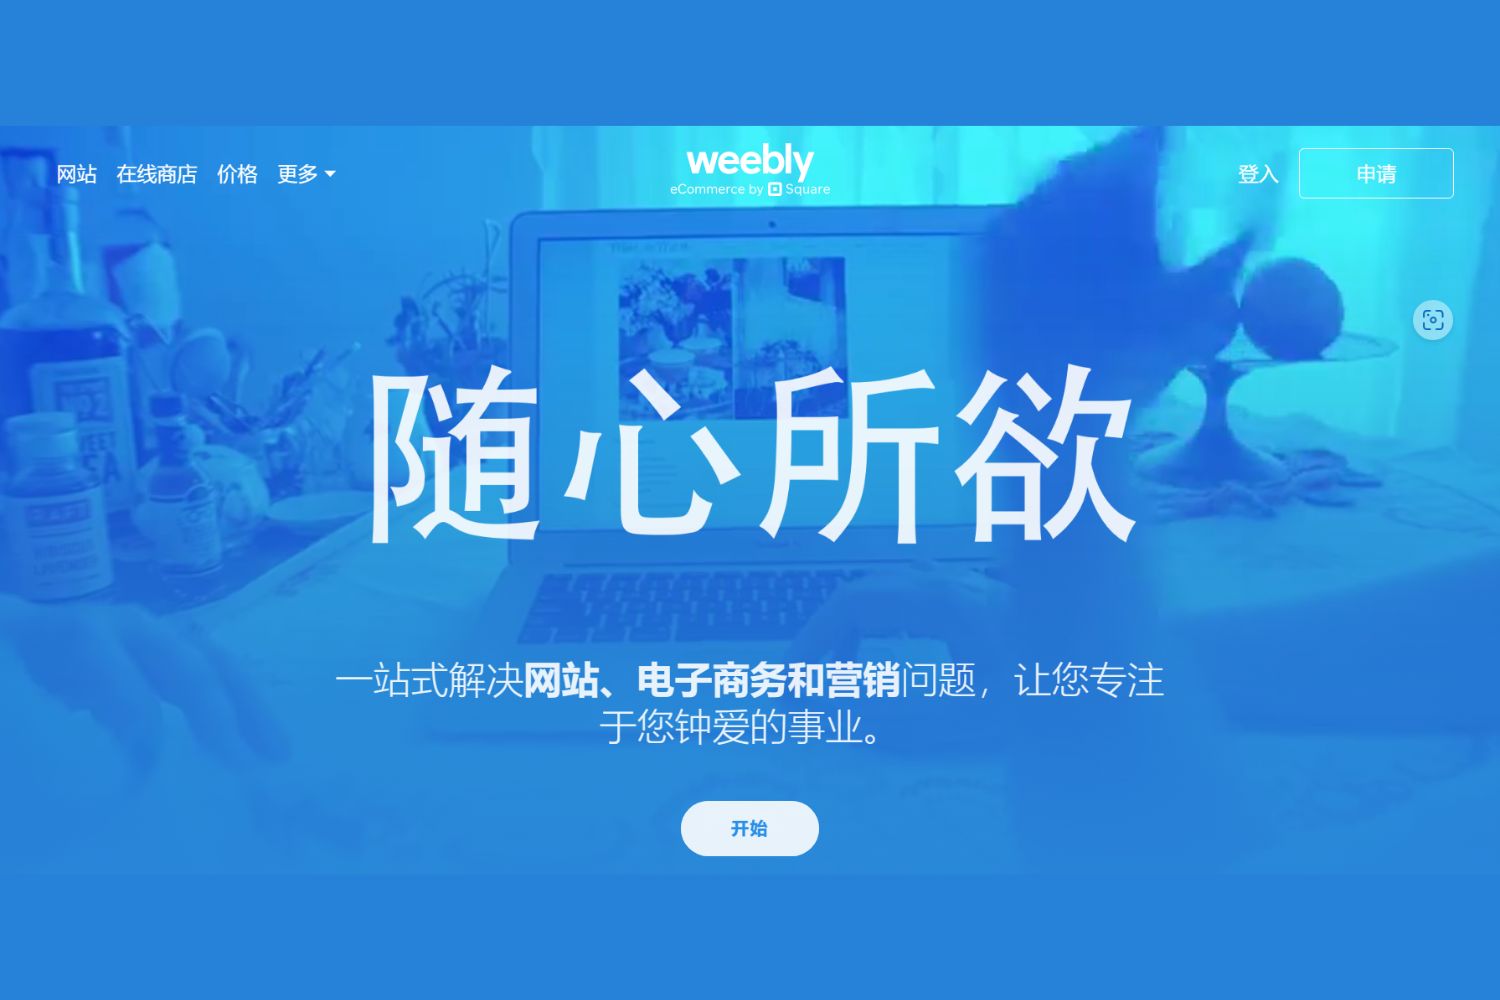 website of Weebly